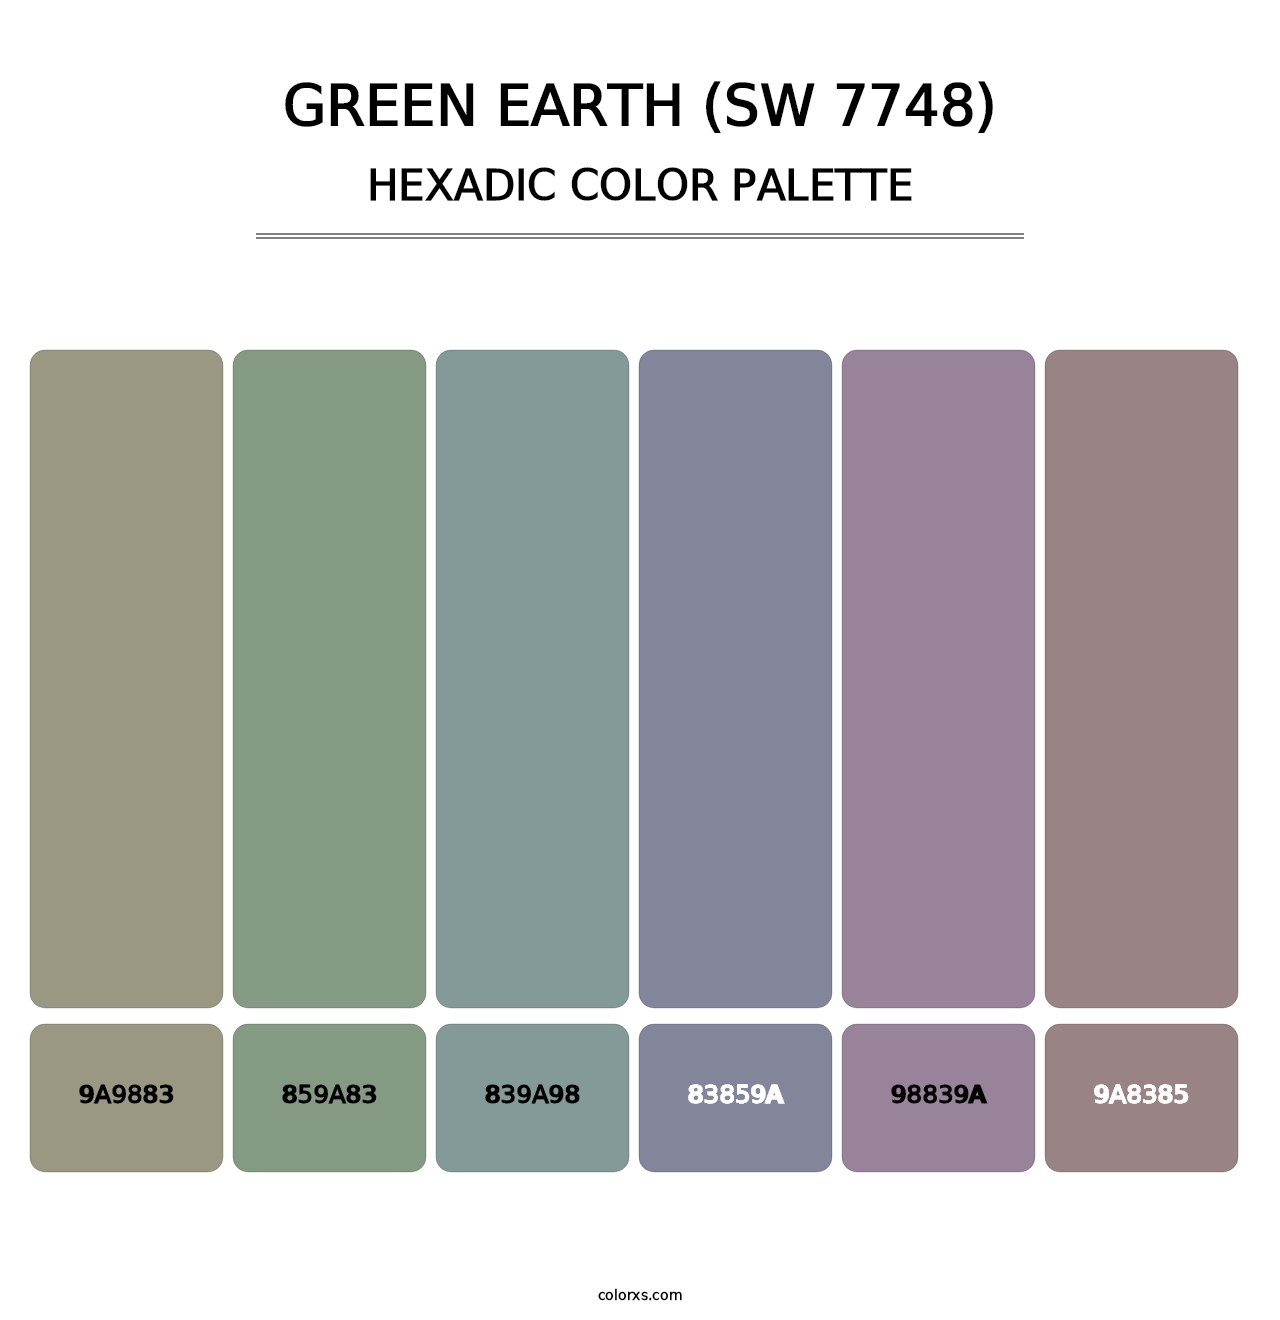 Green Earth (SW 7748) - Hexadic Color Palette